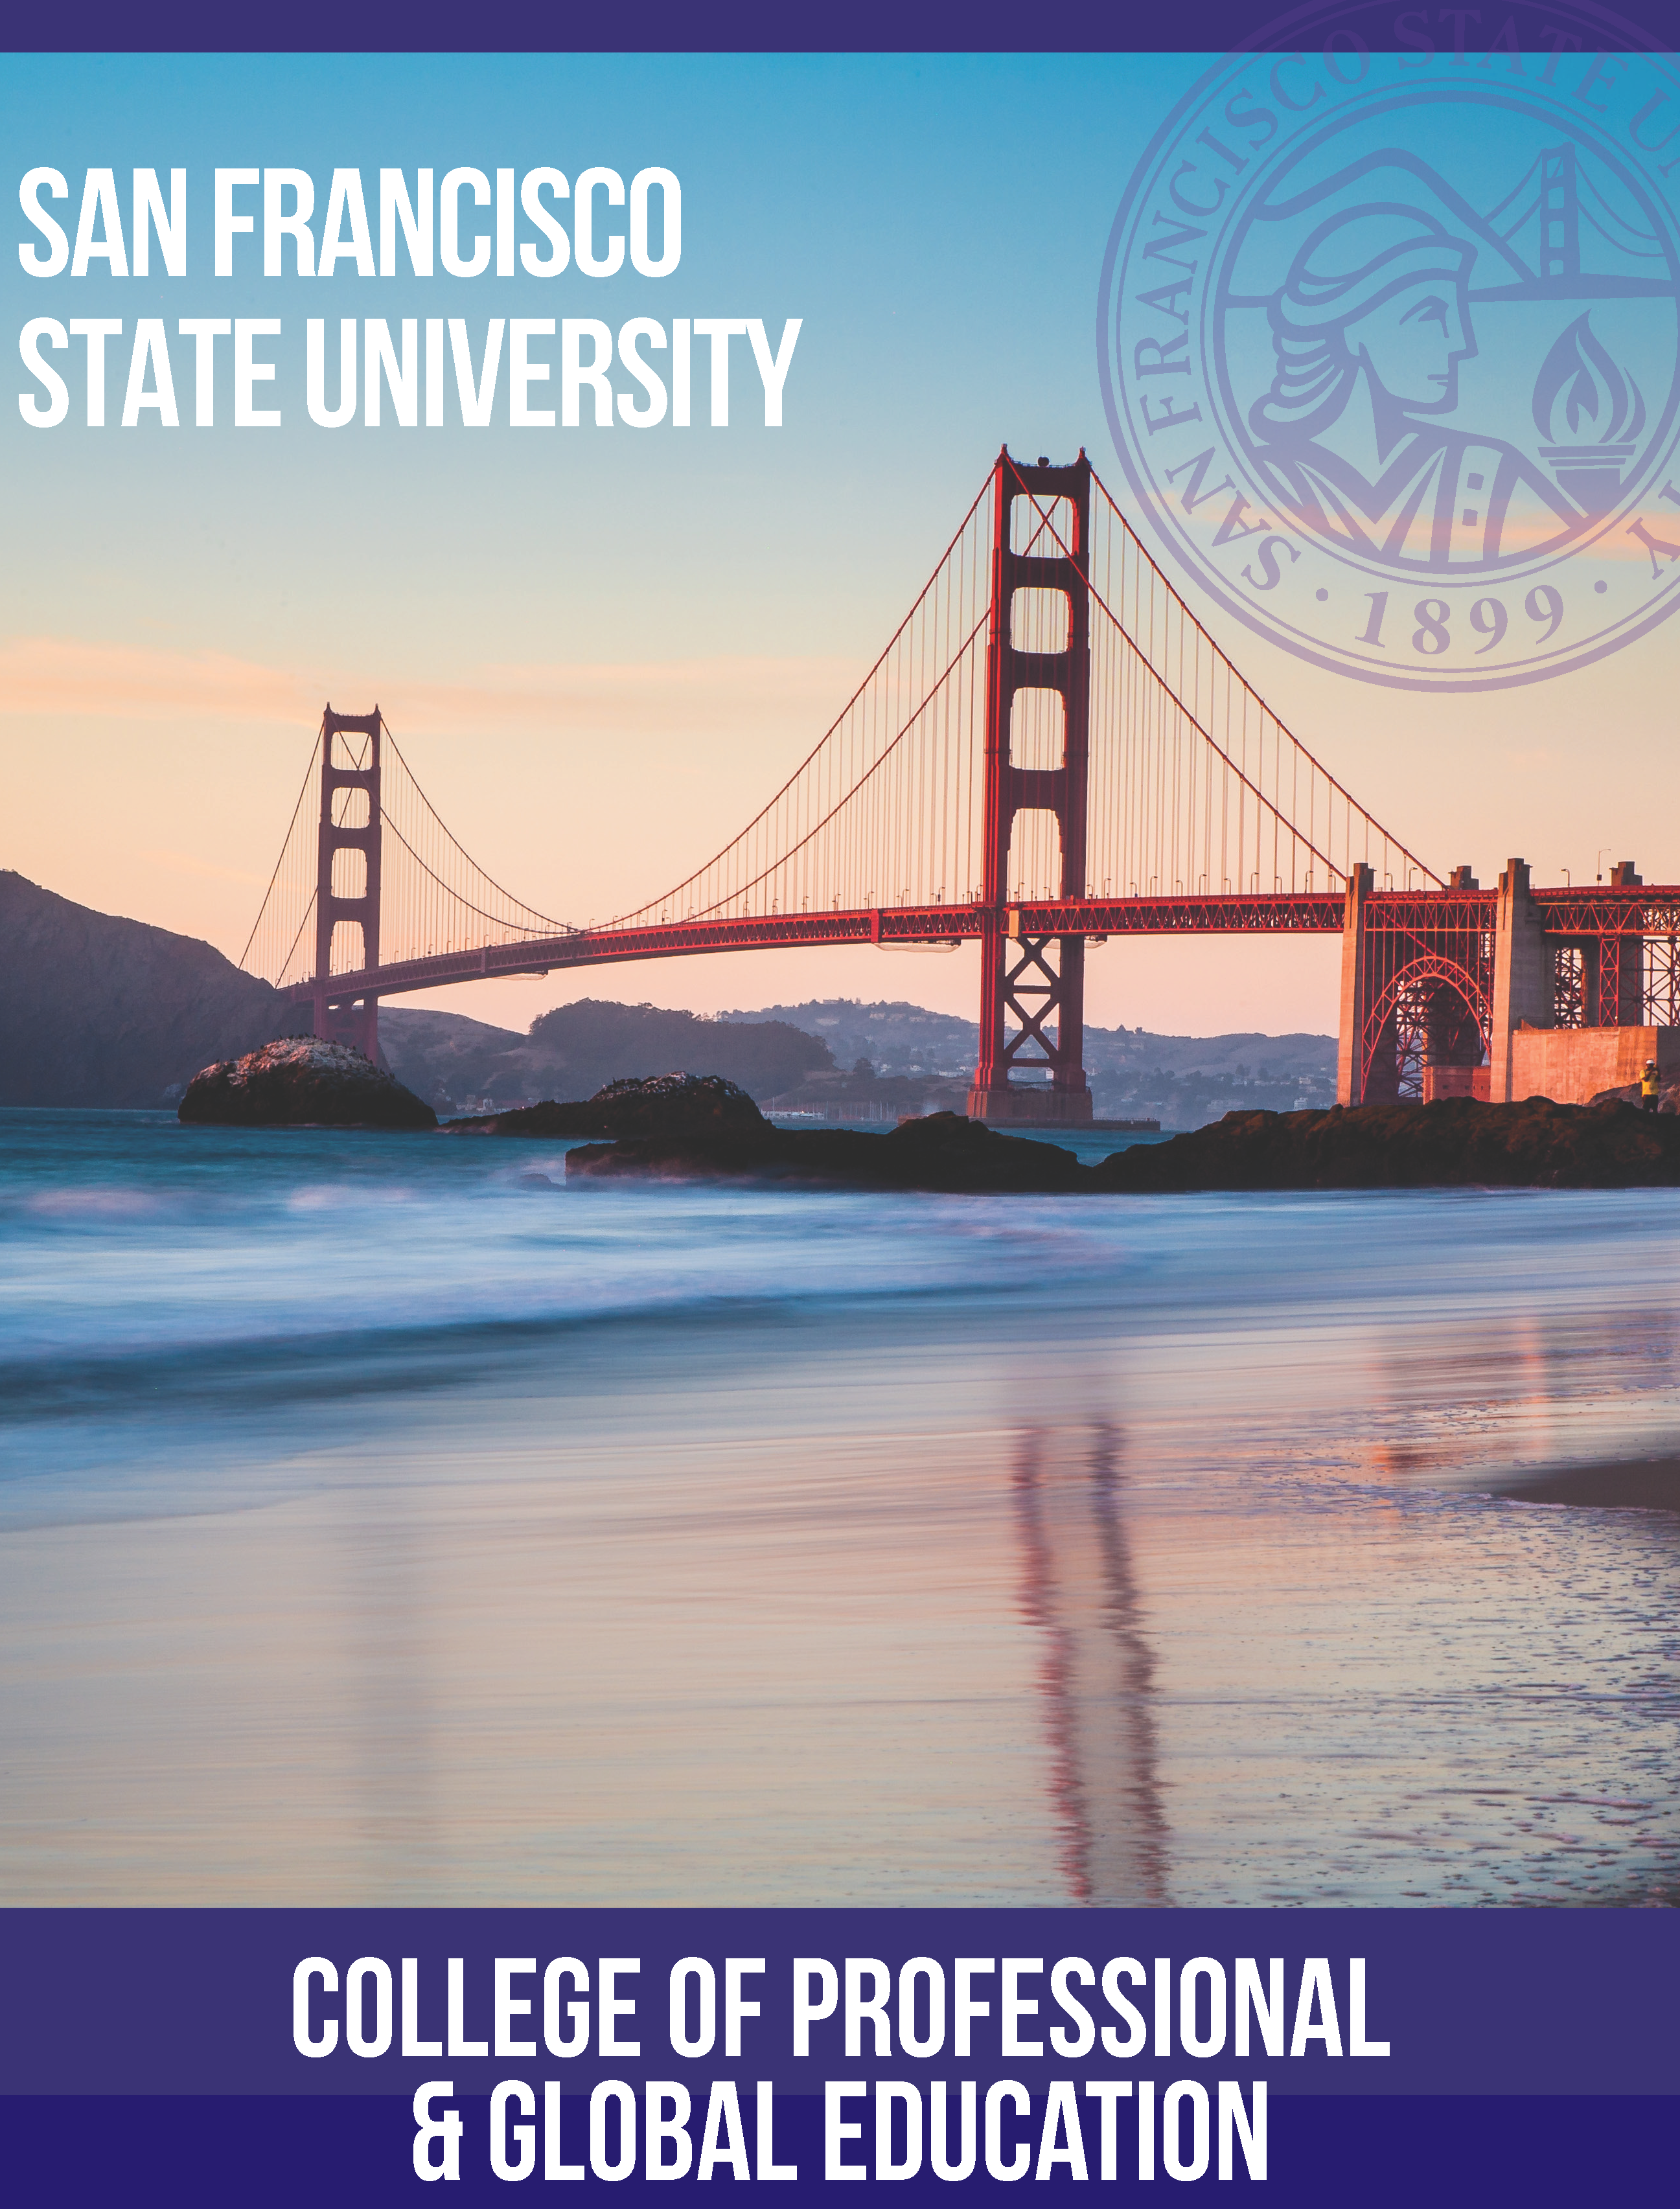 Global viewbook cover featuring the Golden Gate Bridge